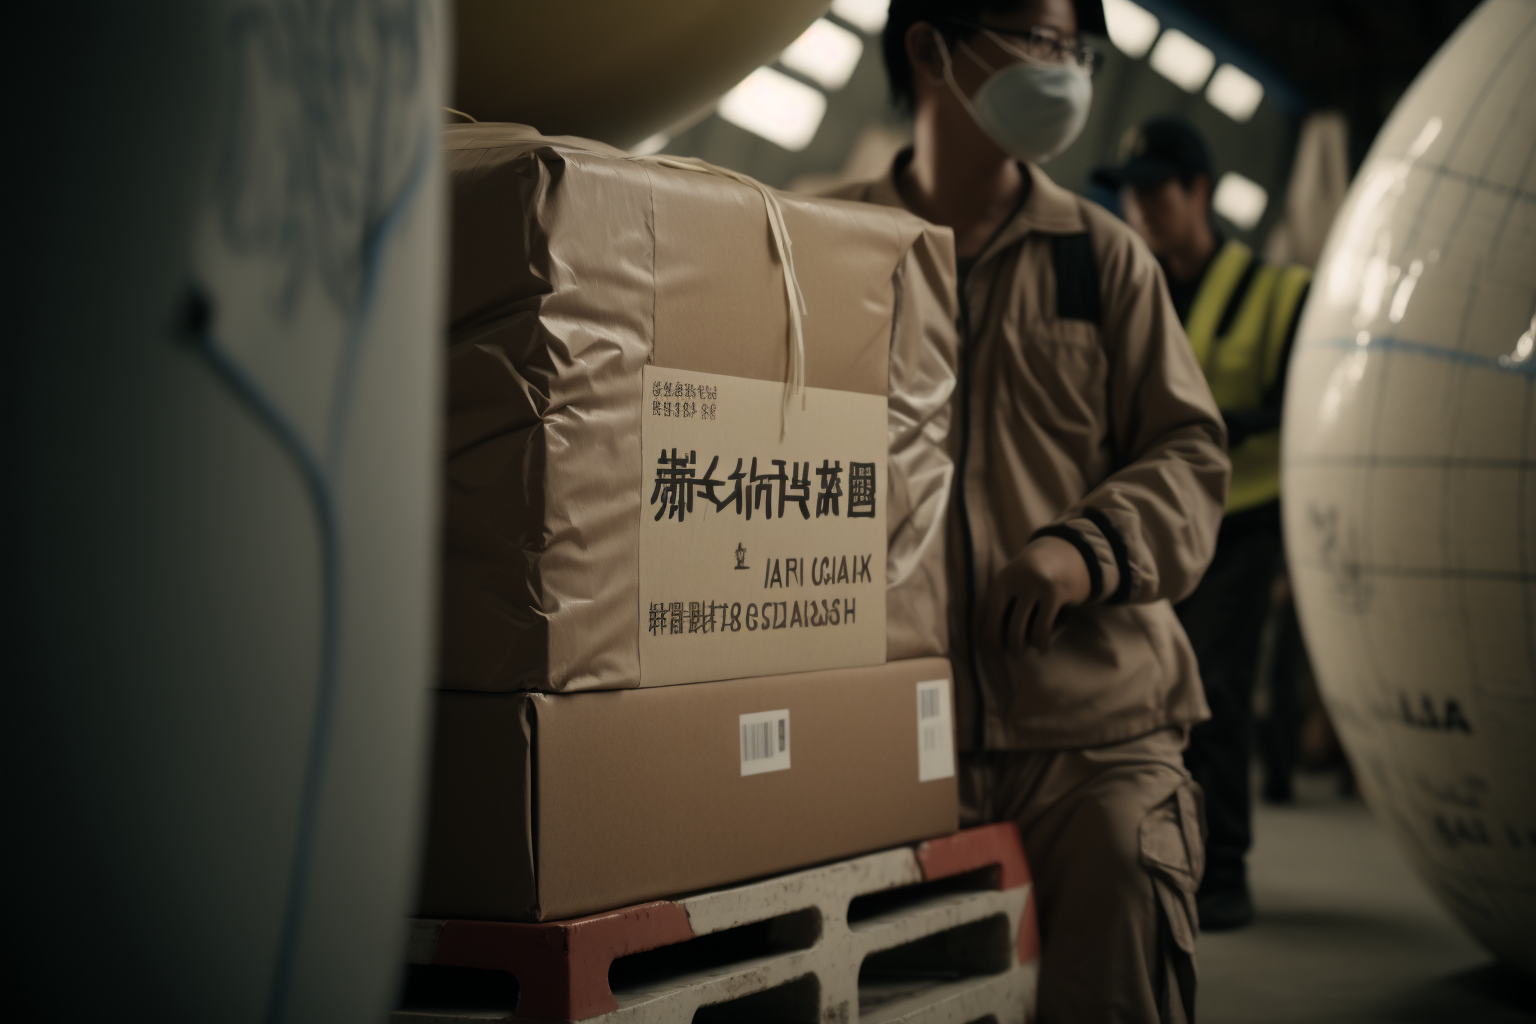 Cargo in a cardboard box